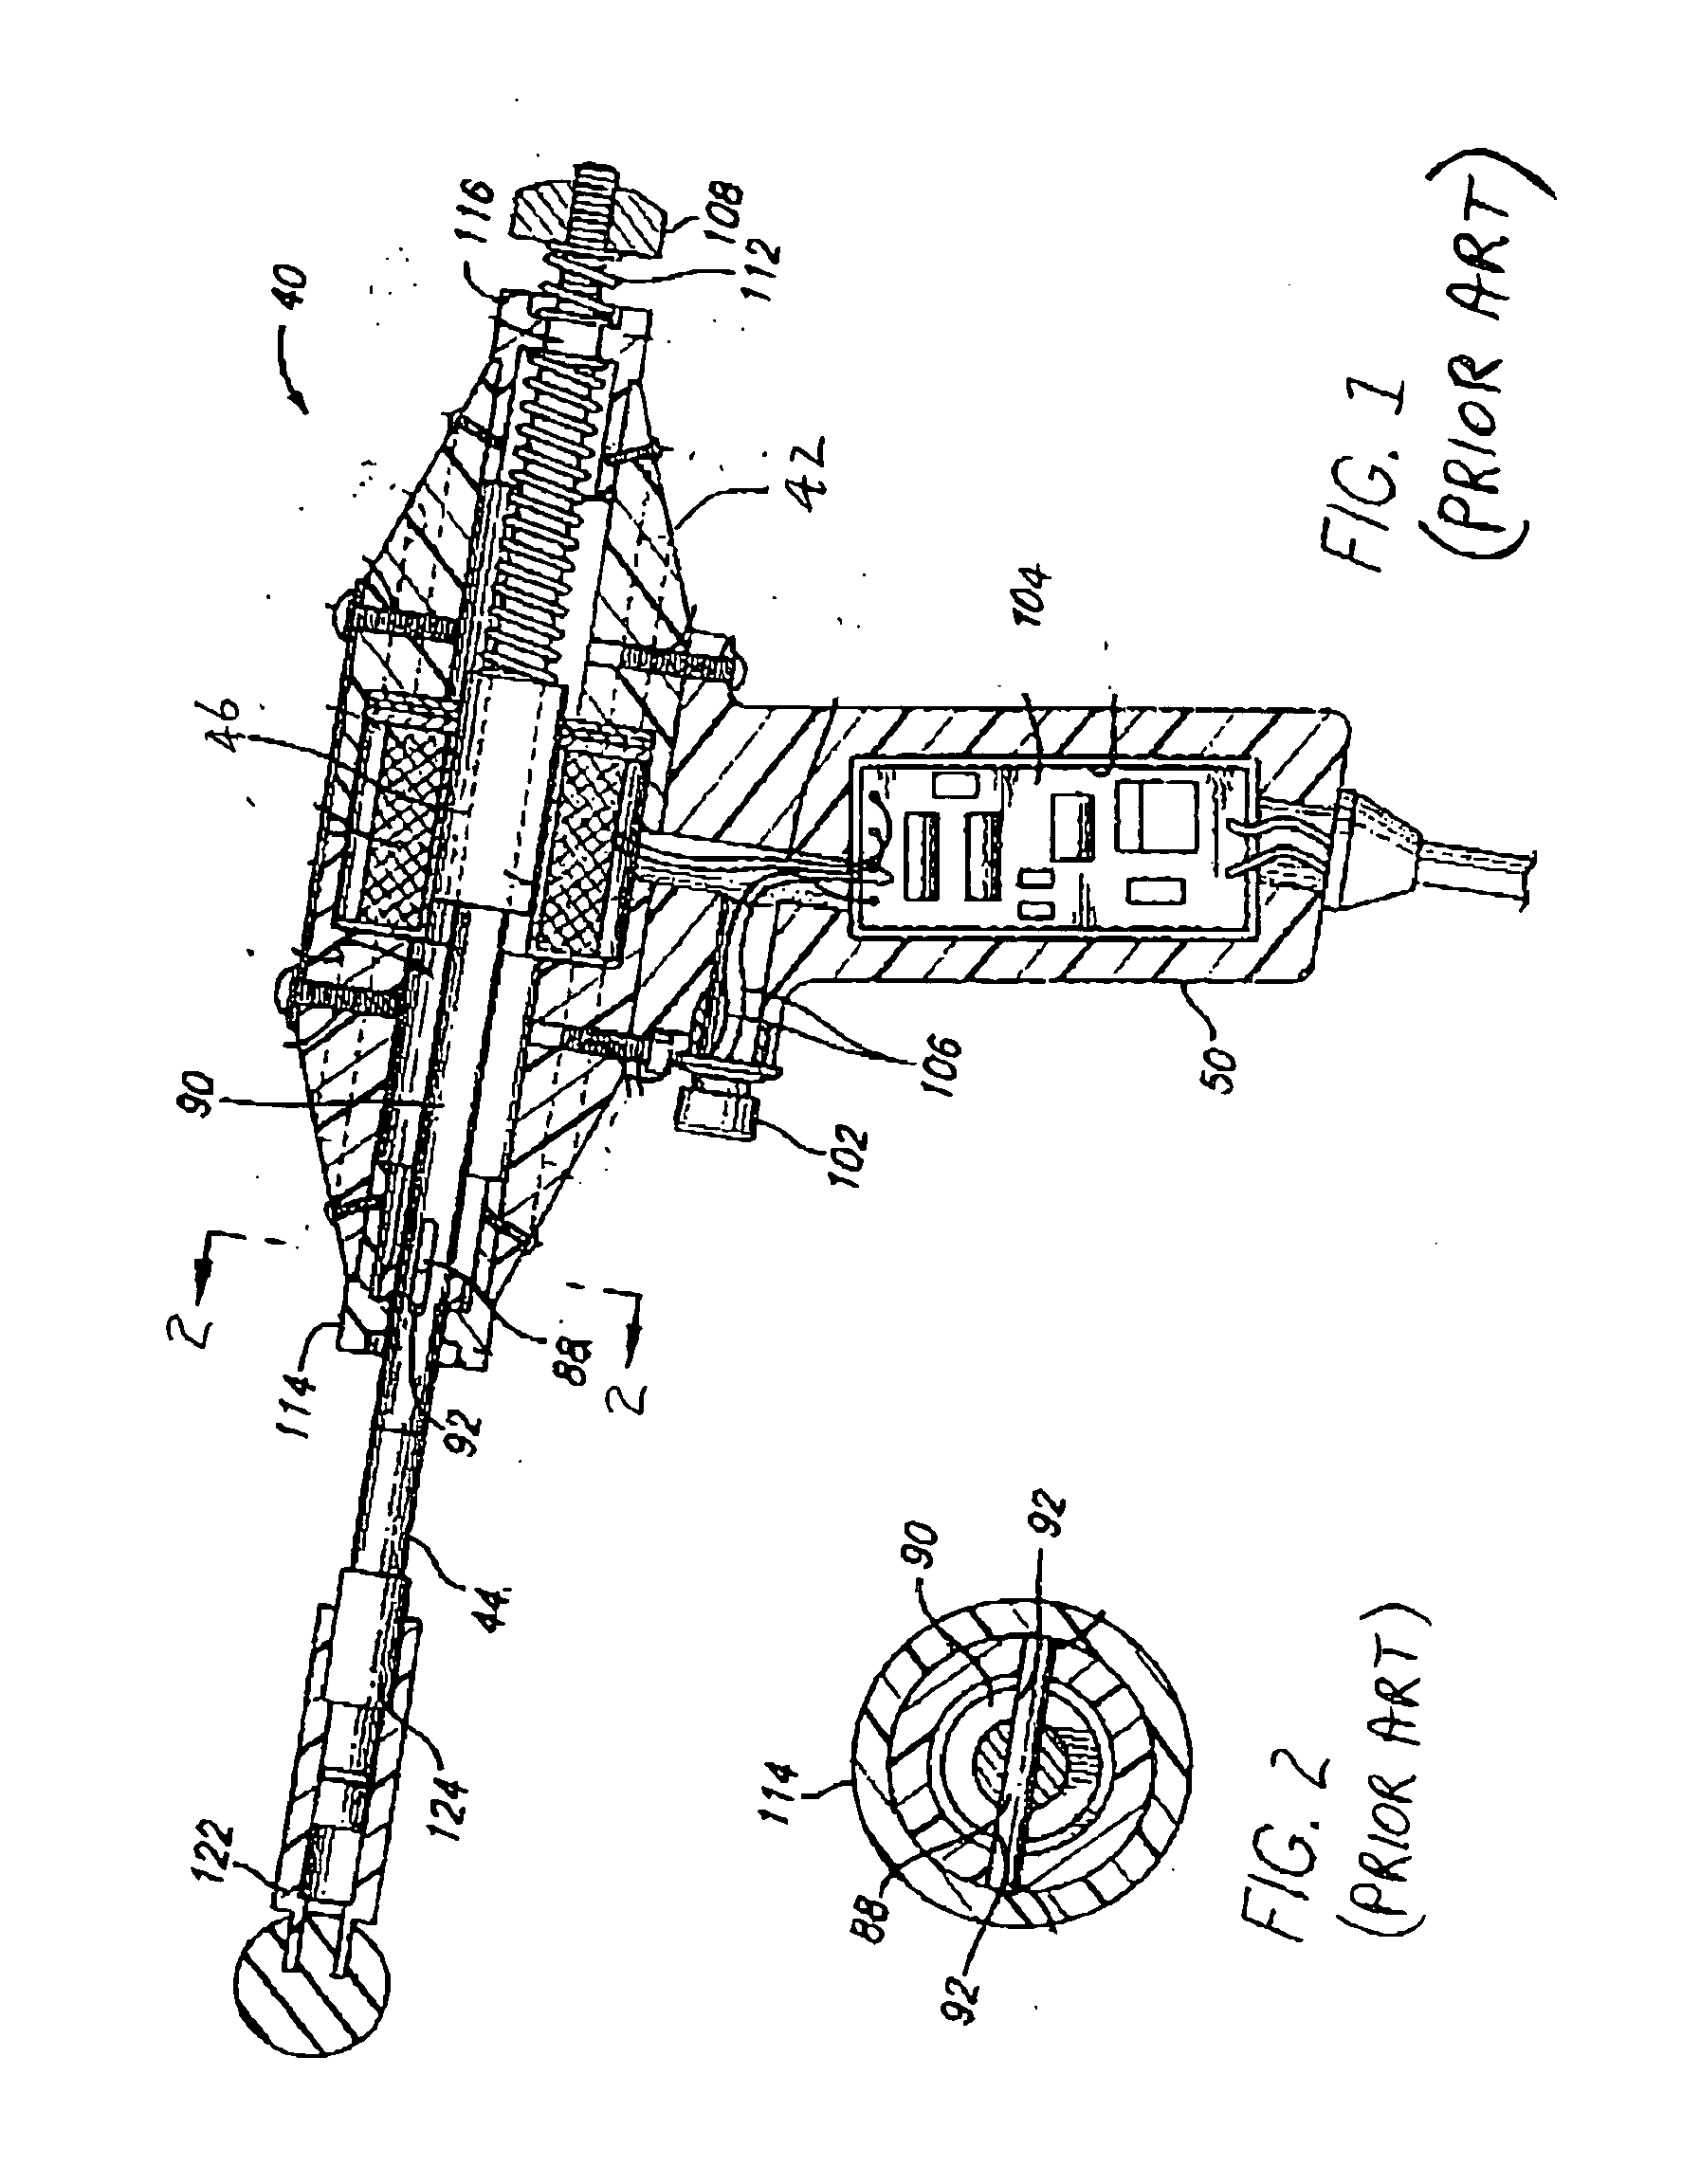 Chiropractic adjustor apparatus with rotation hub